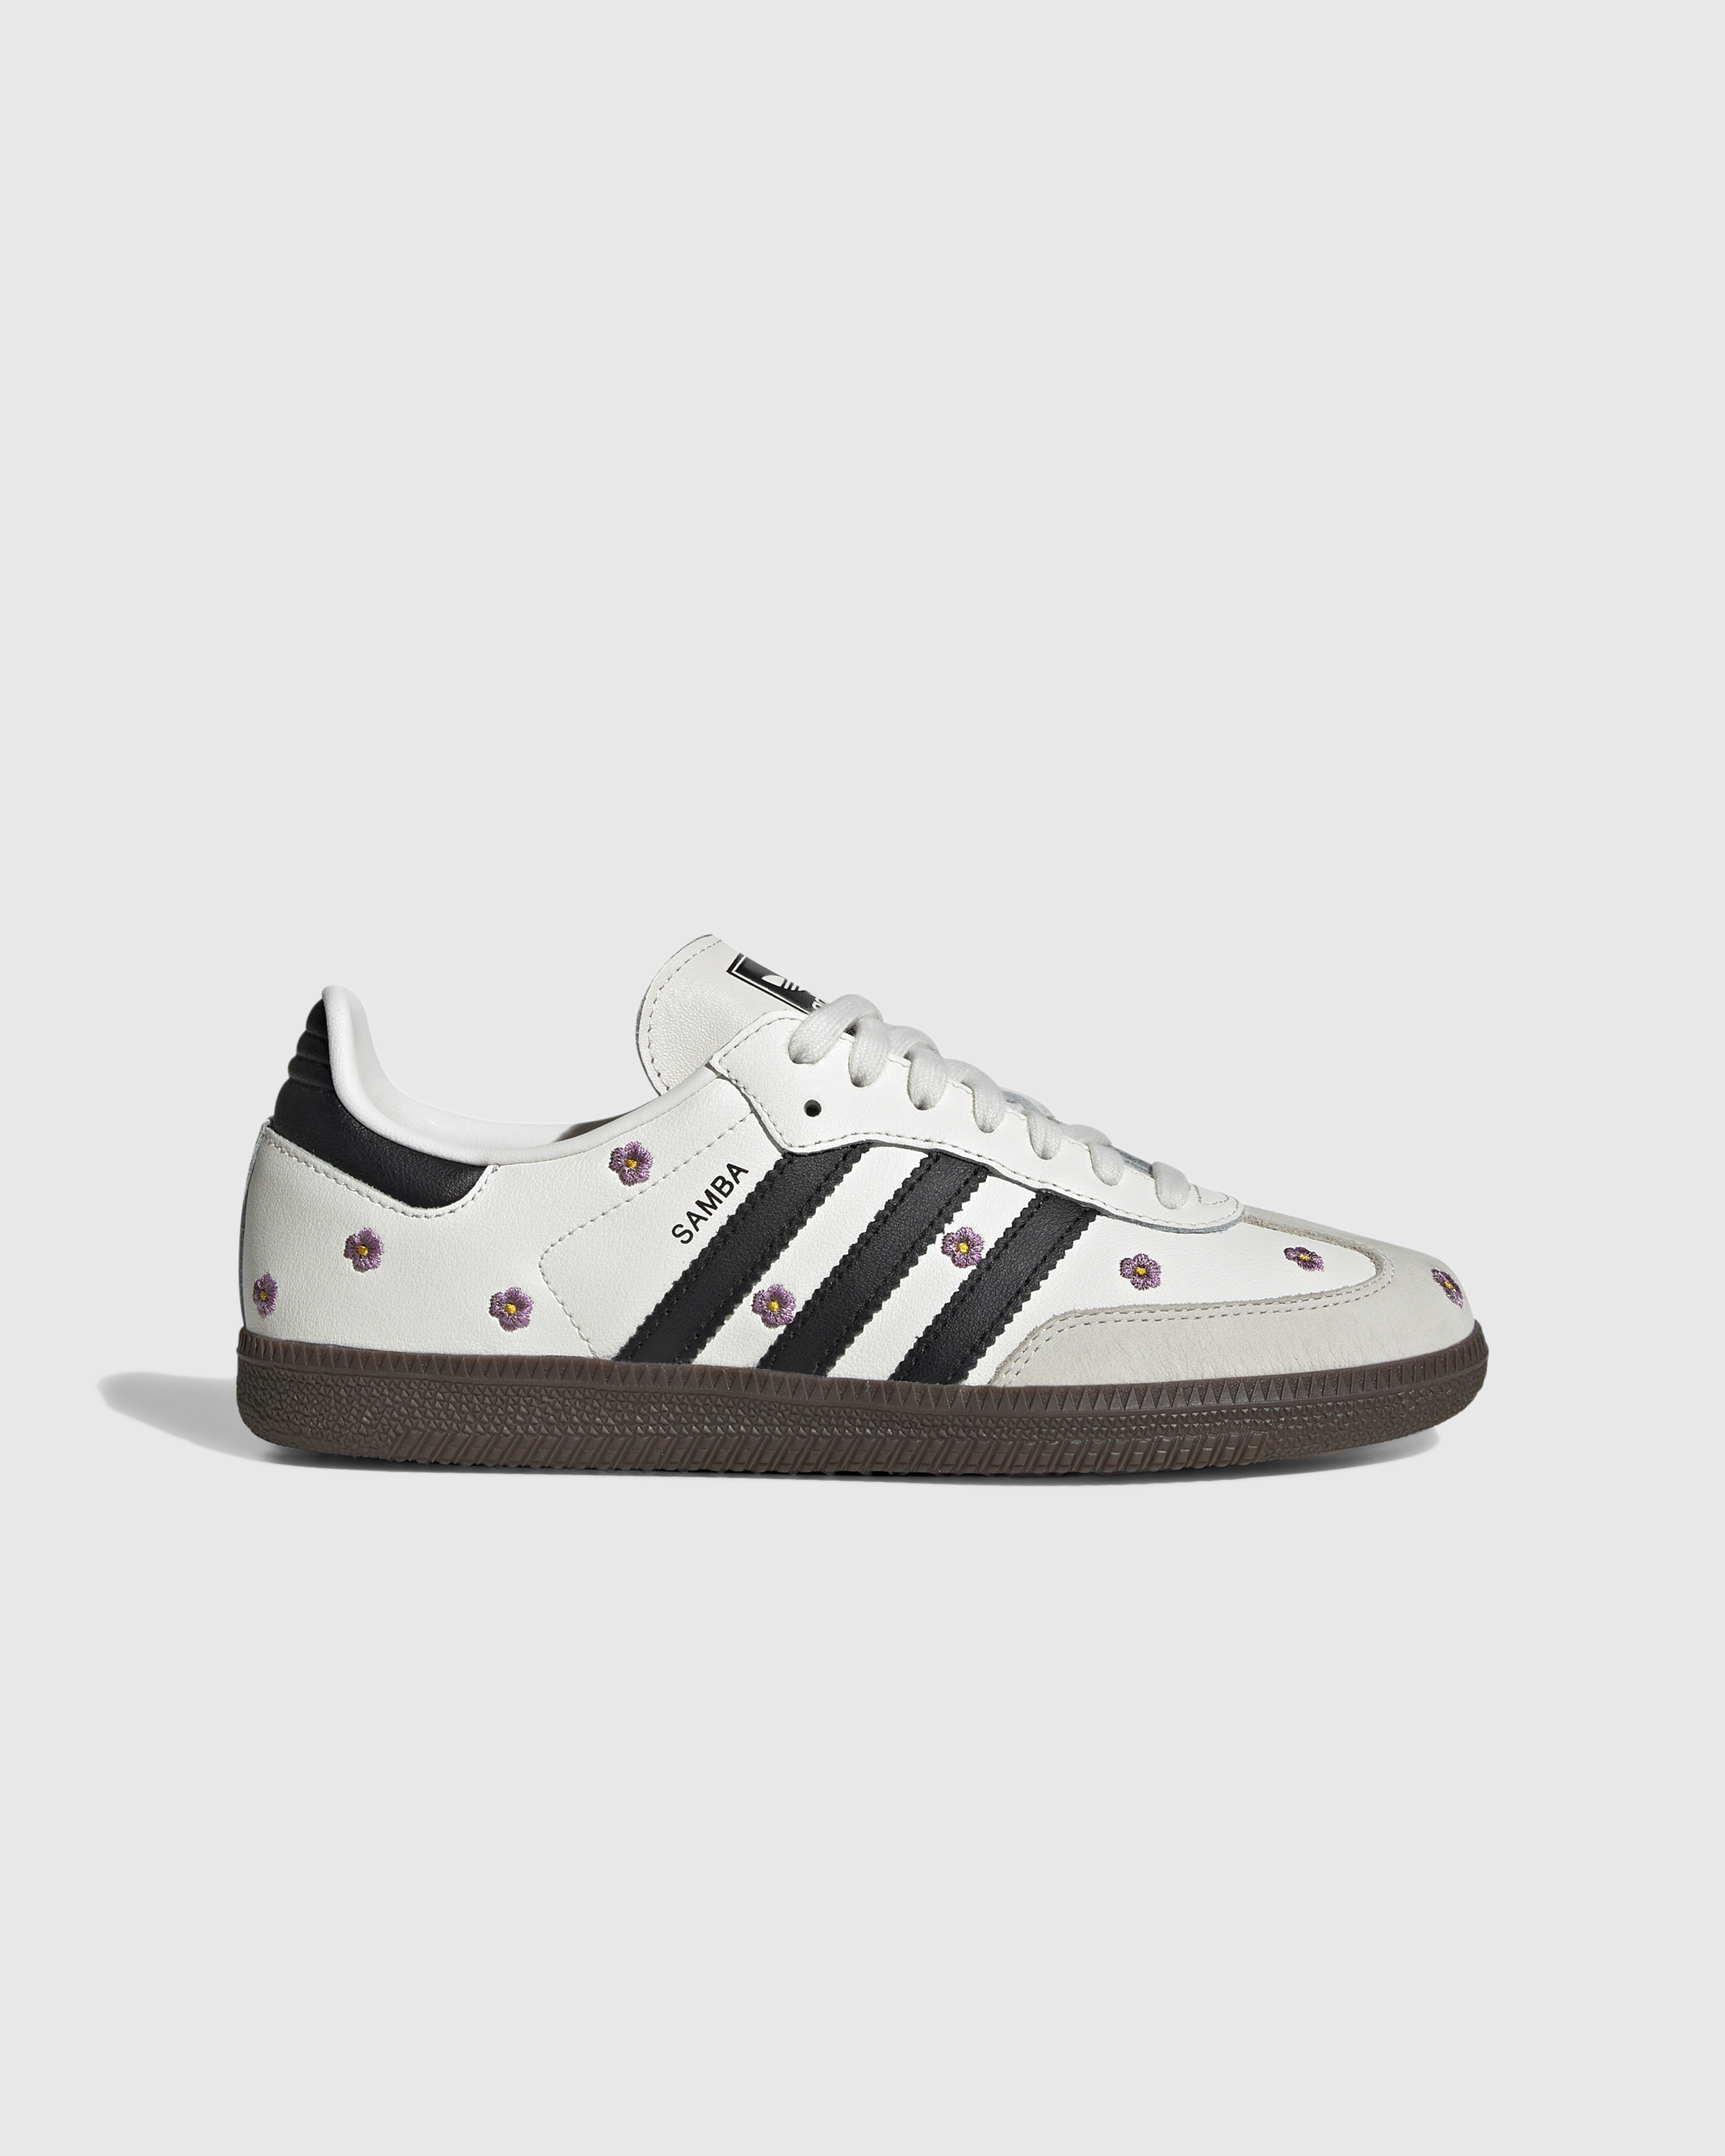 Adidas – Samba OG W White/Black/Gum - Low Top Sneakers - White - Image 1